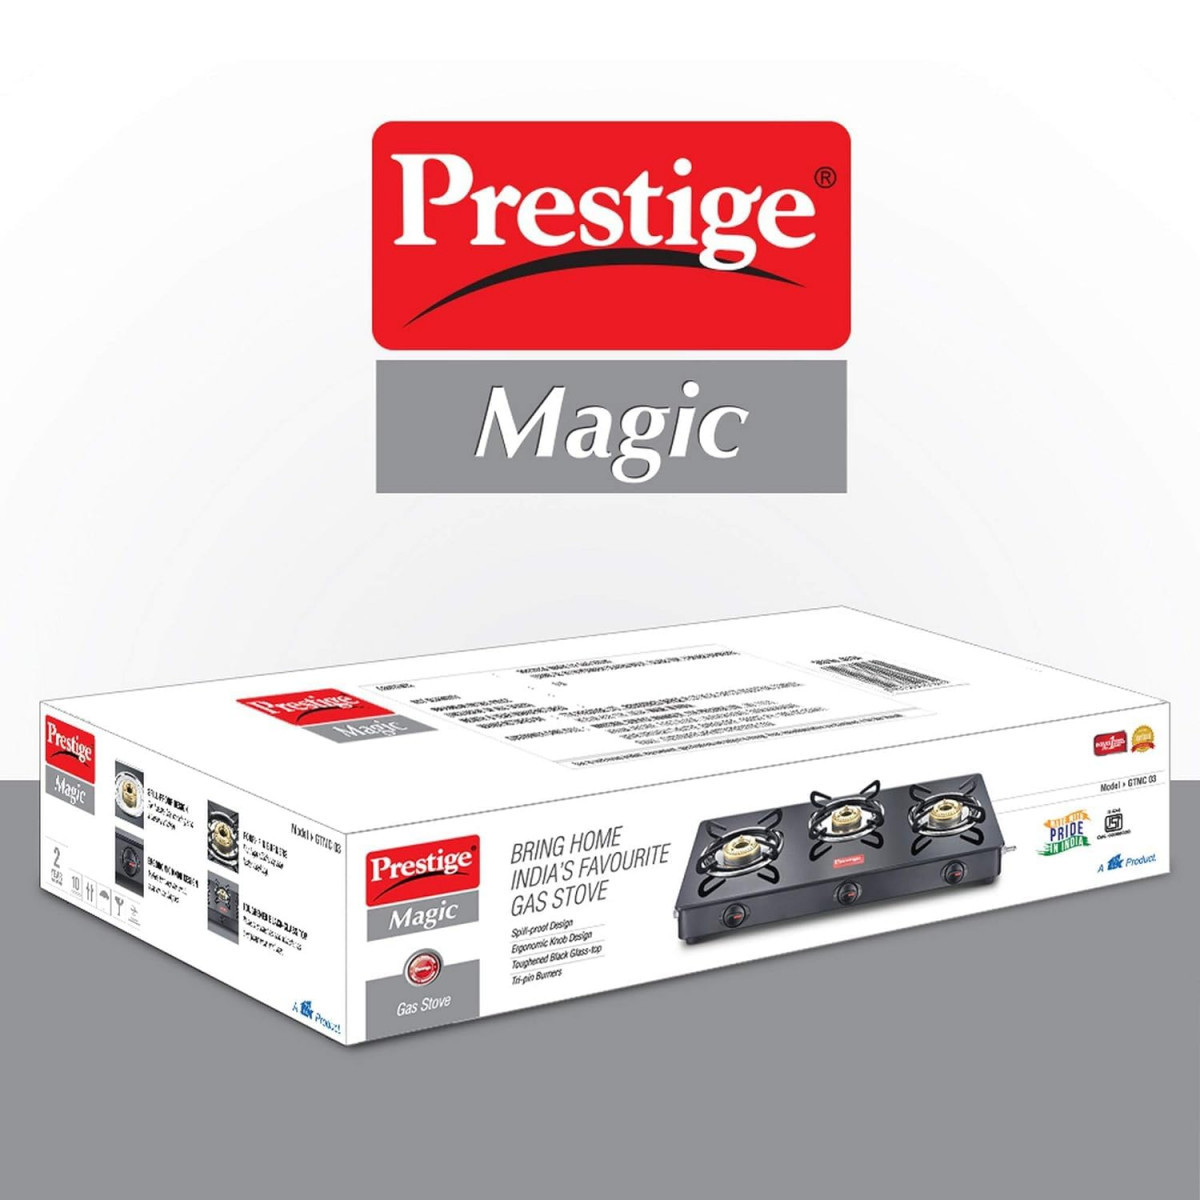 Prestige Magic Toughened Glass-Top 3 Brass Burner Gas Stove